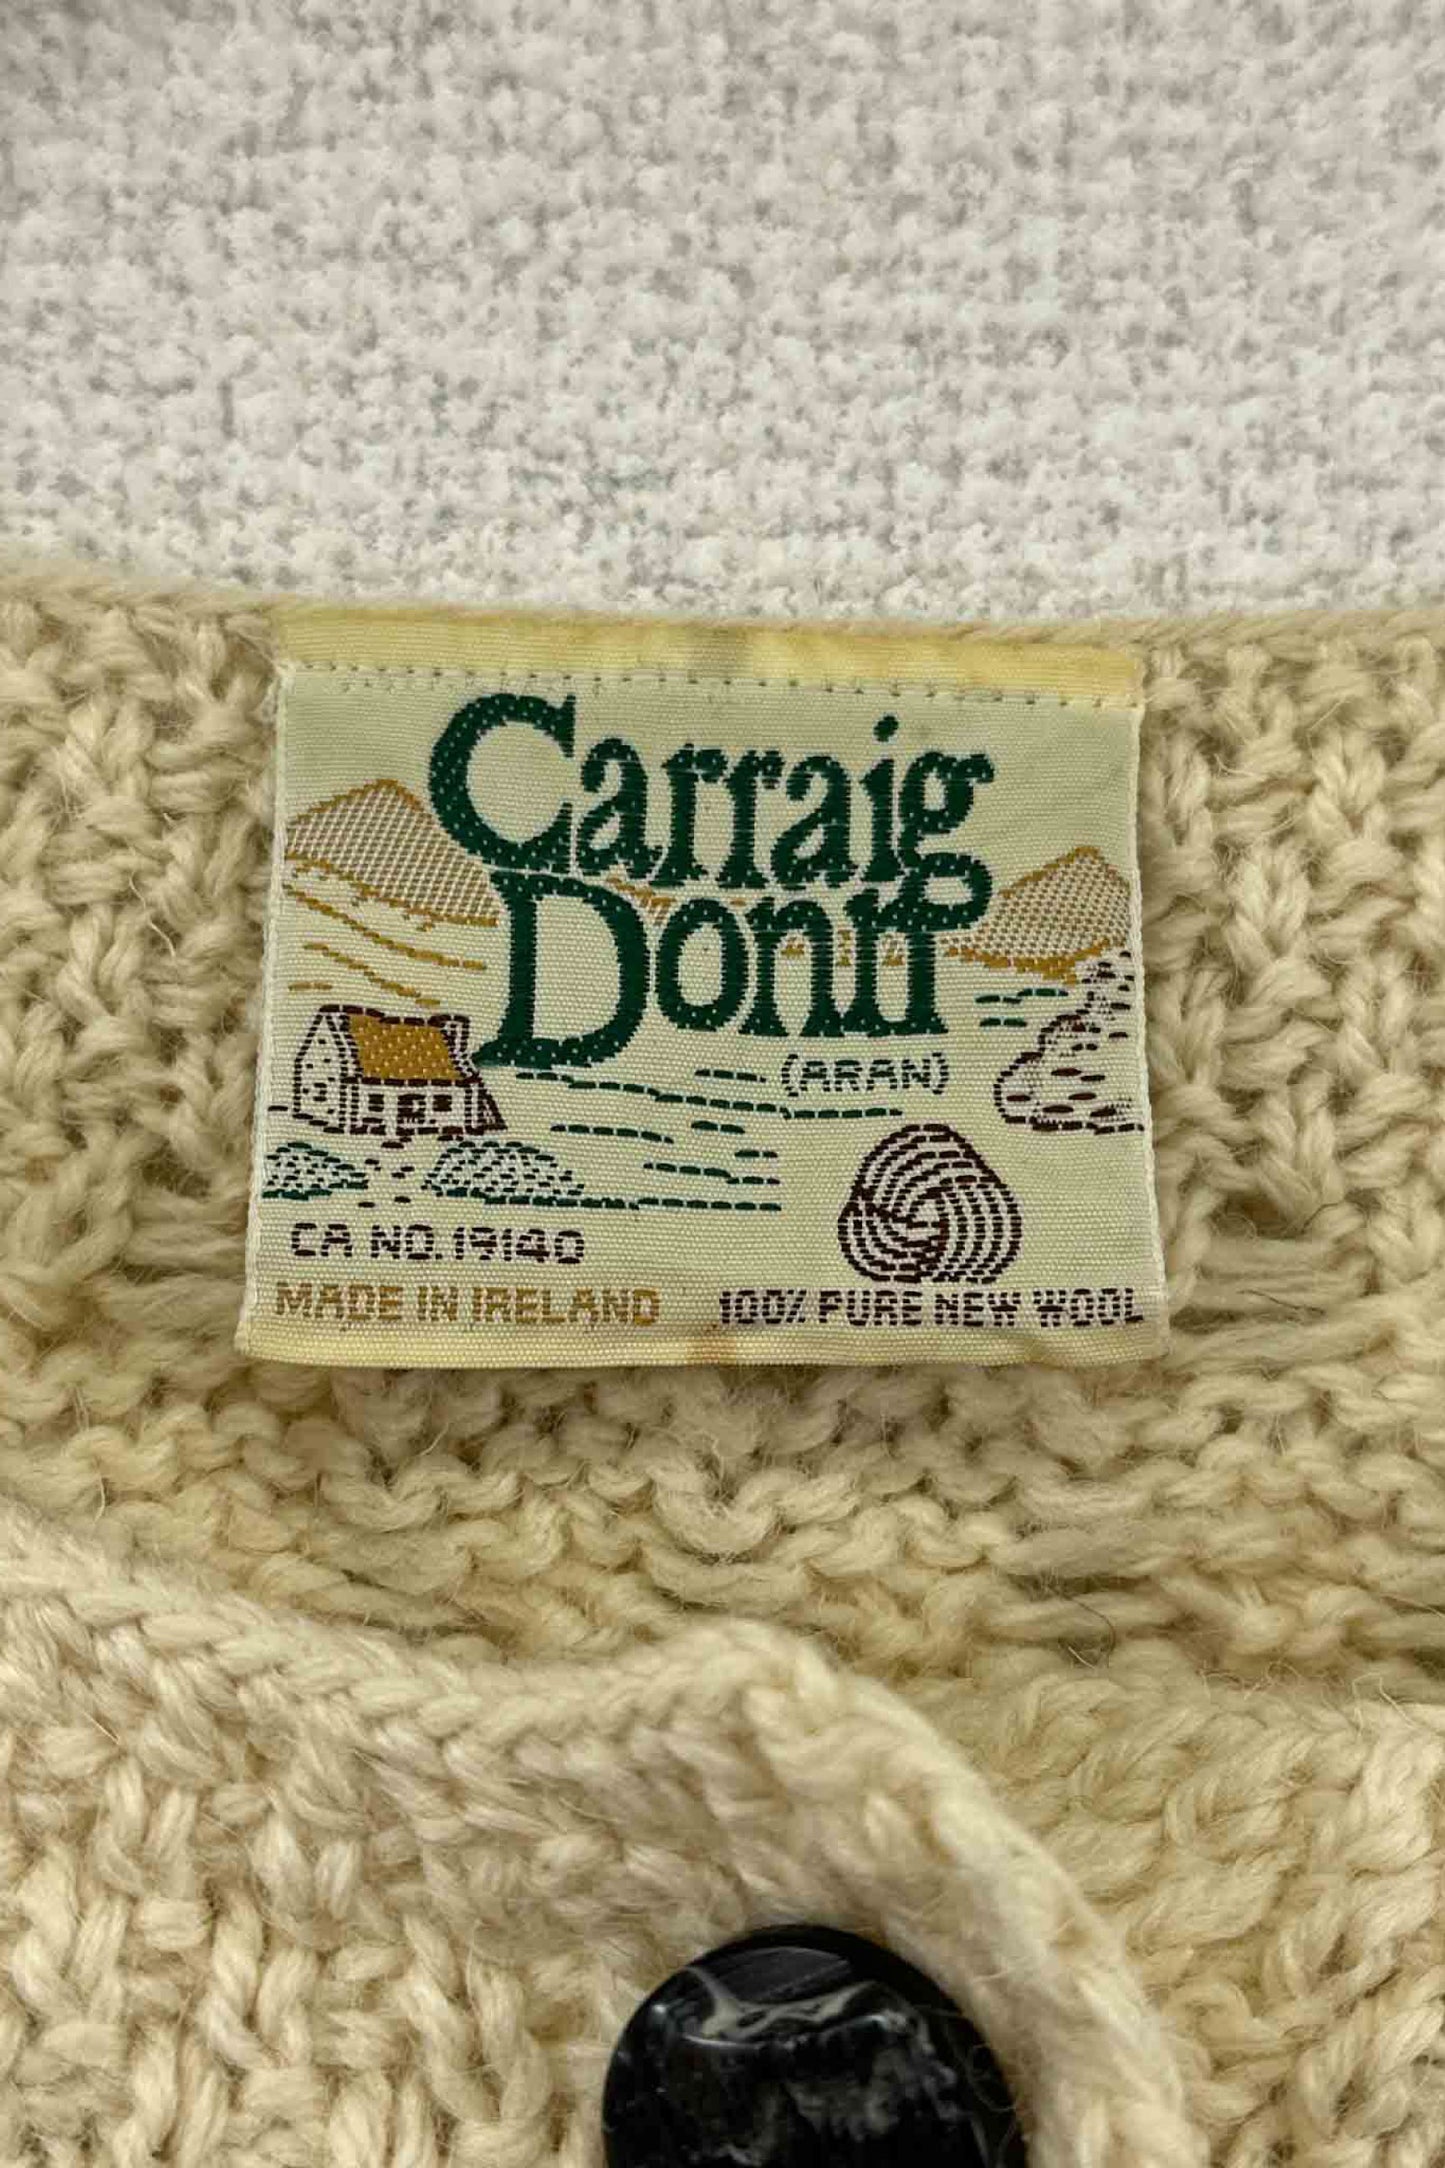 Made in Ireland Carraig Donn aran knit cardigan